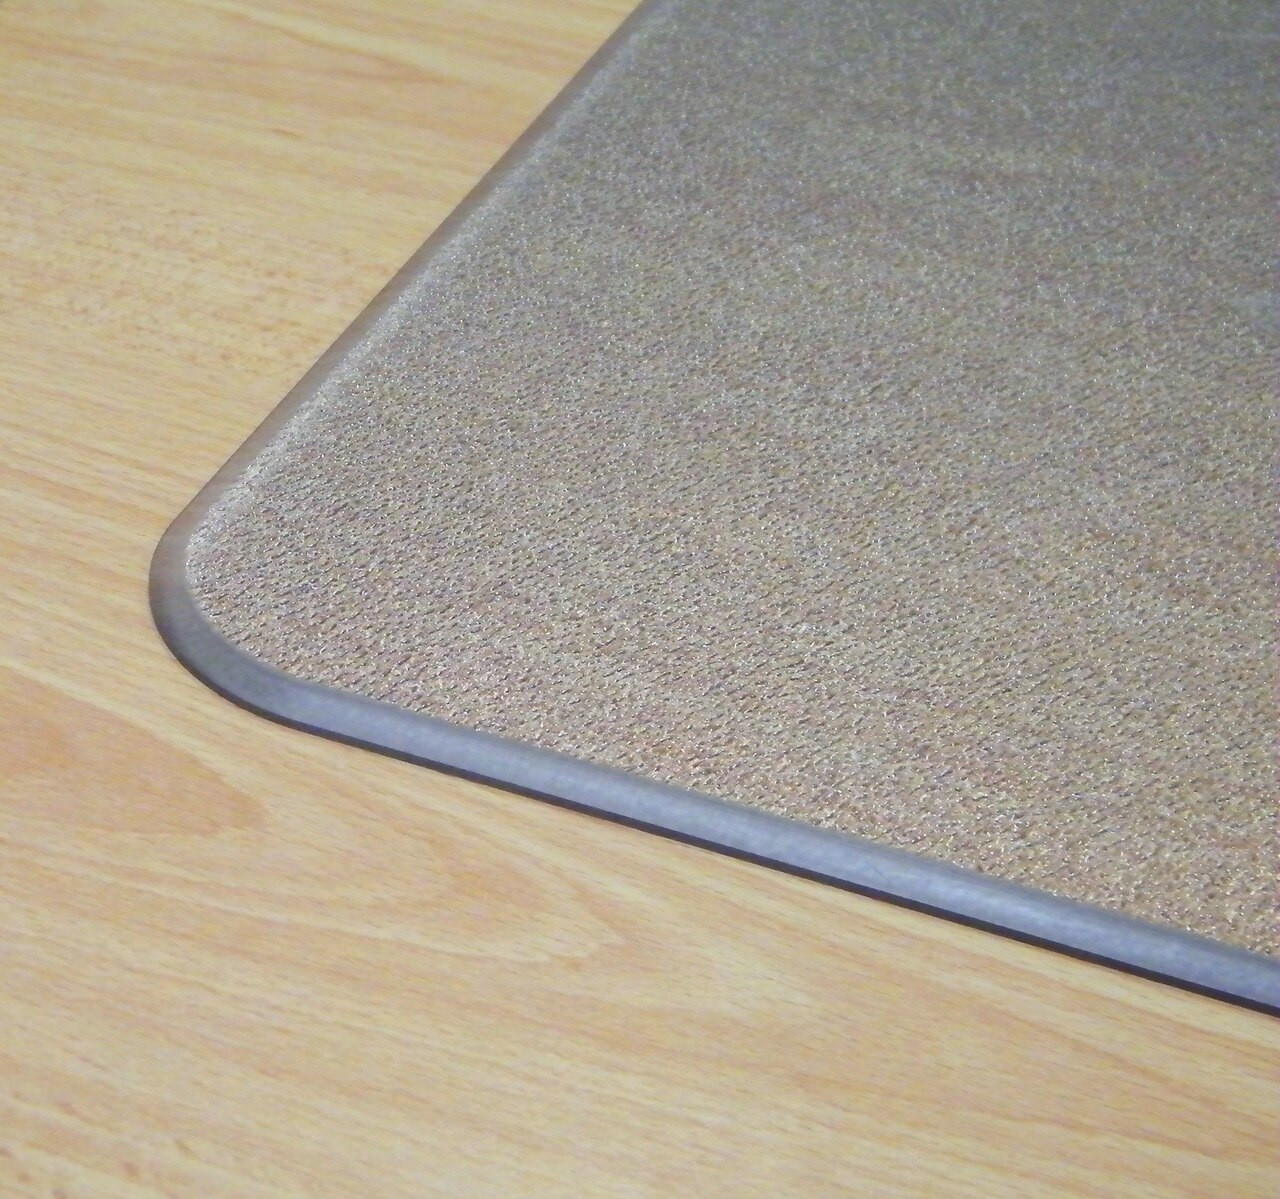 Cleartex MegaMat Heavy Duty Polycarbonate Floor and Carpet